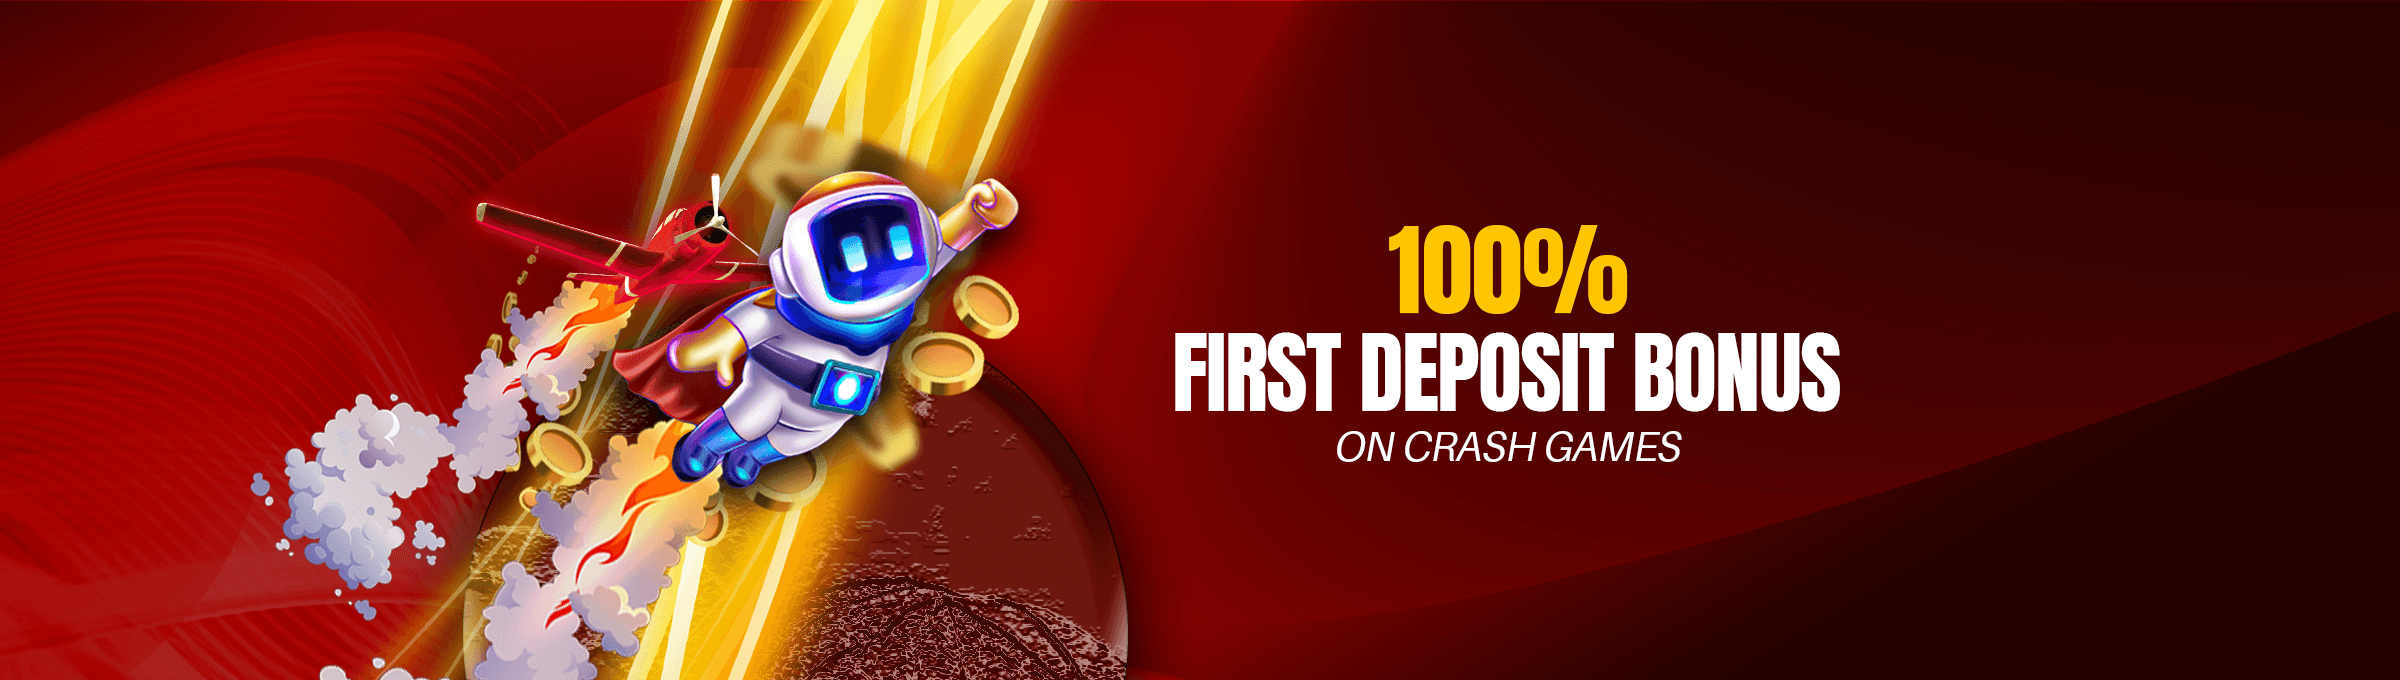 100% First Deposit Bonus on Crash Games